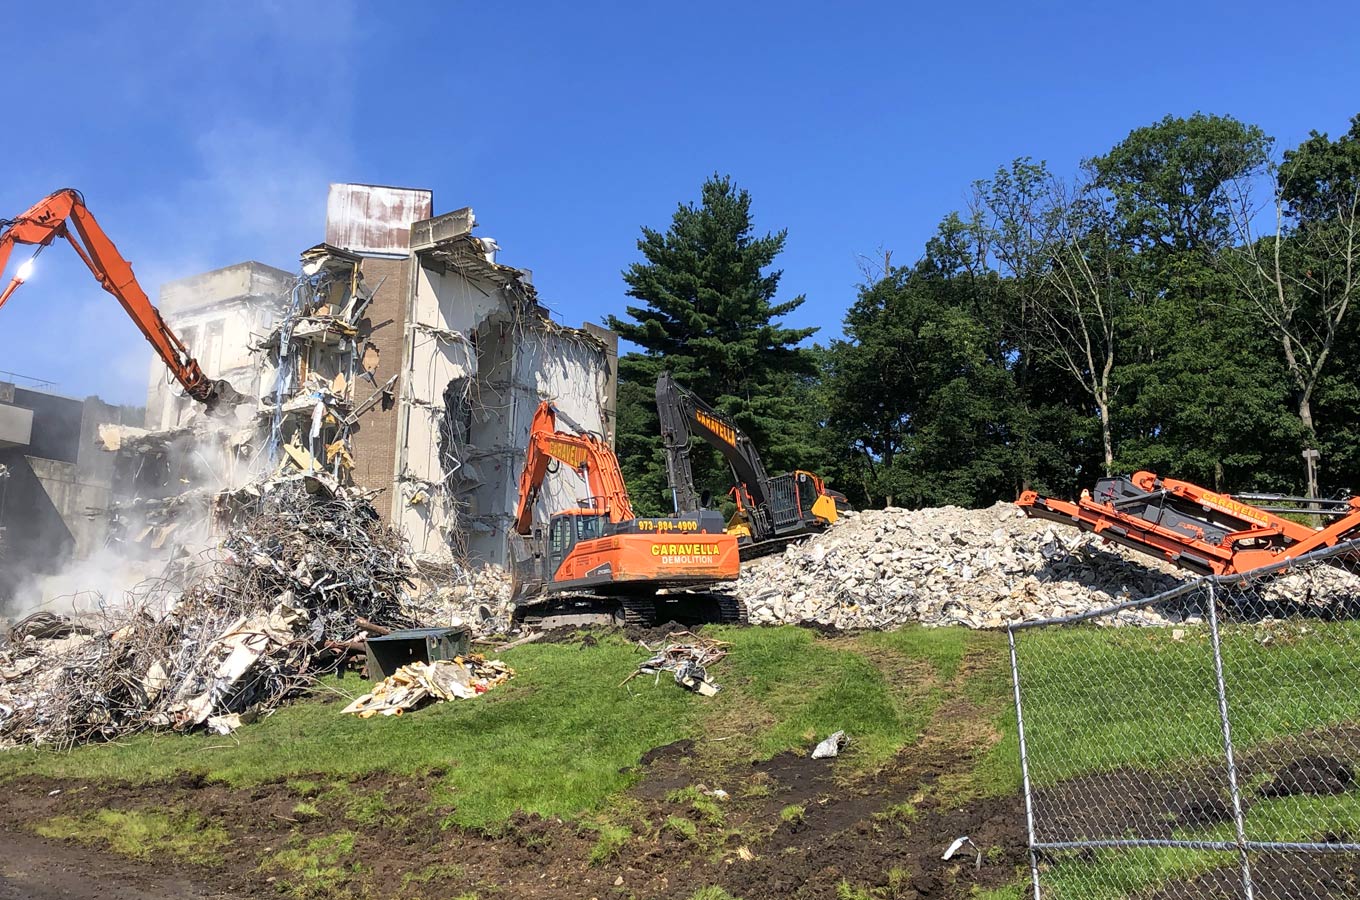 Demolition Services in Ridgewood, NJ 07450 | Caravella Demolition